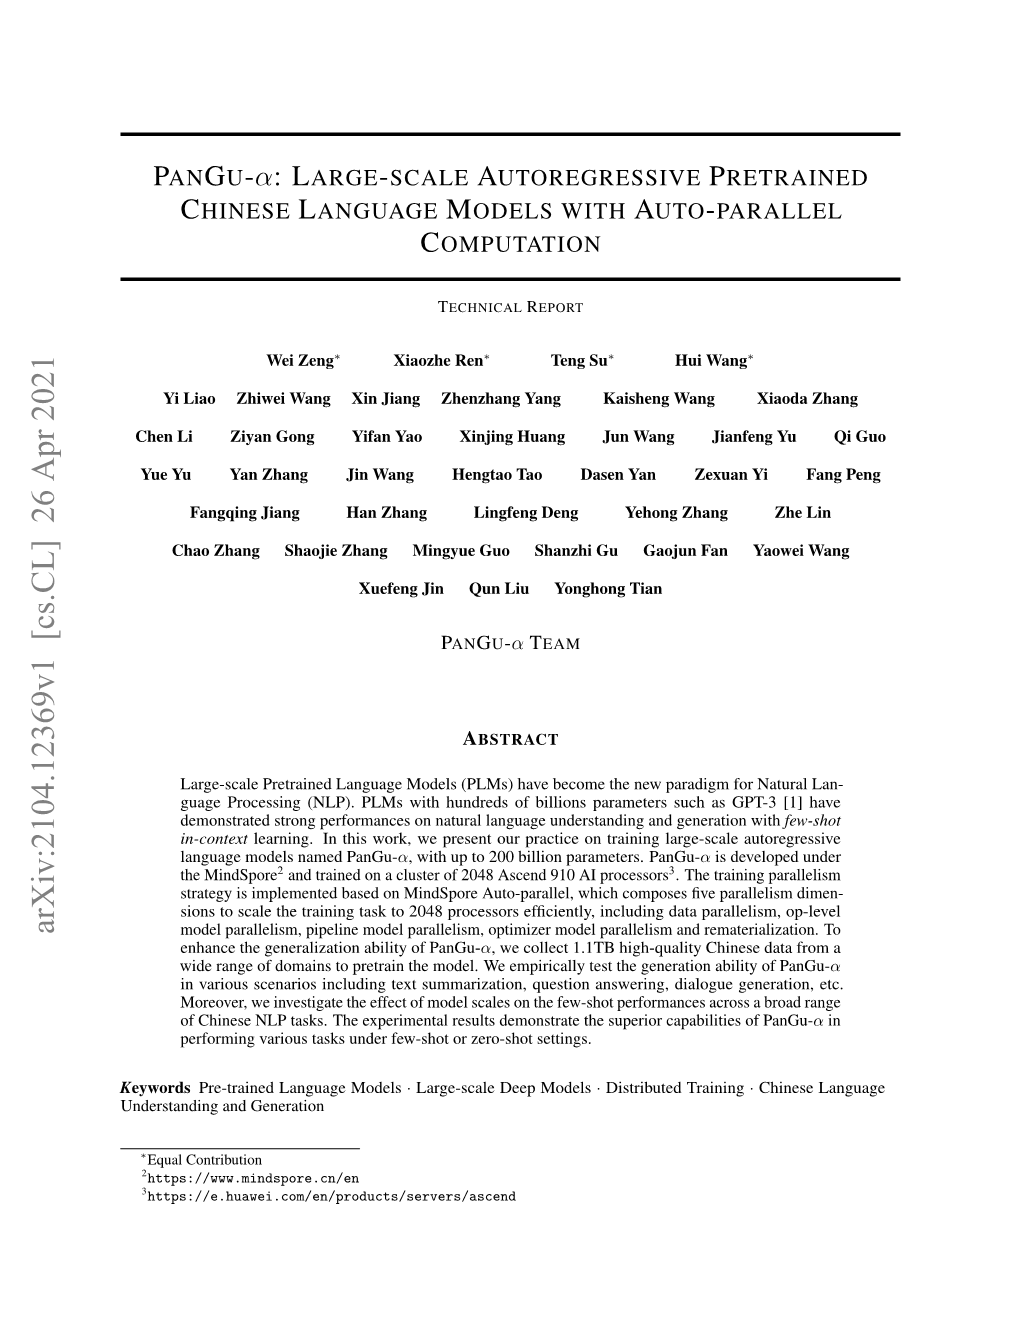 Pangu-Α: Large-Scale Autoregressive Pretrained Chinese Language Models with Auto-Parallel Computation